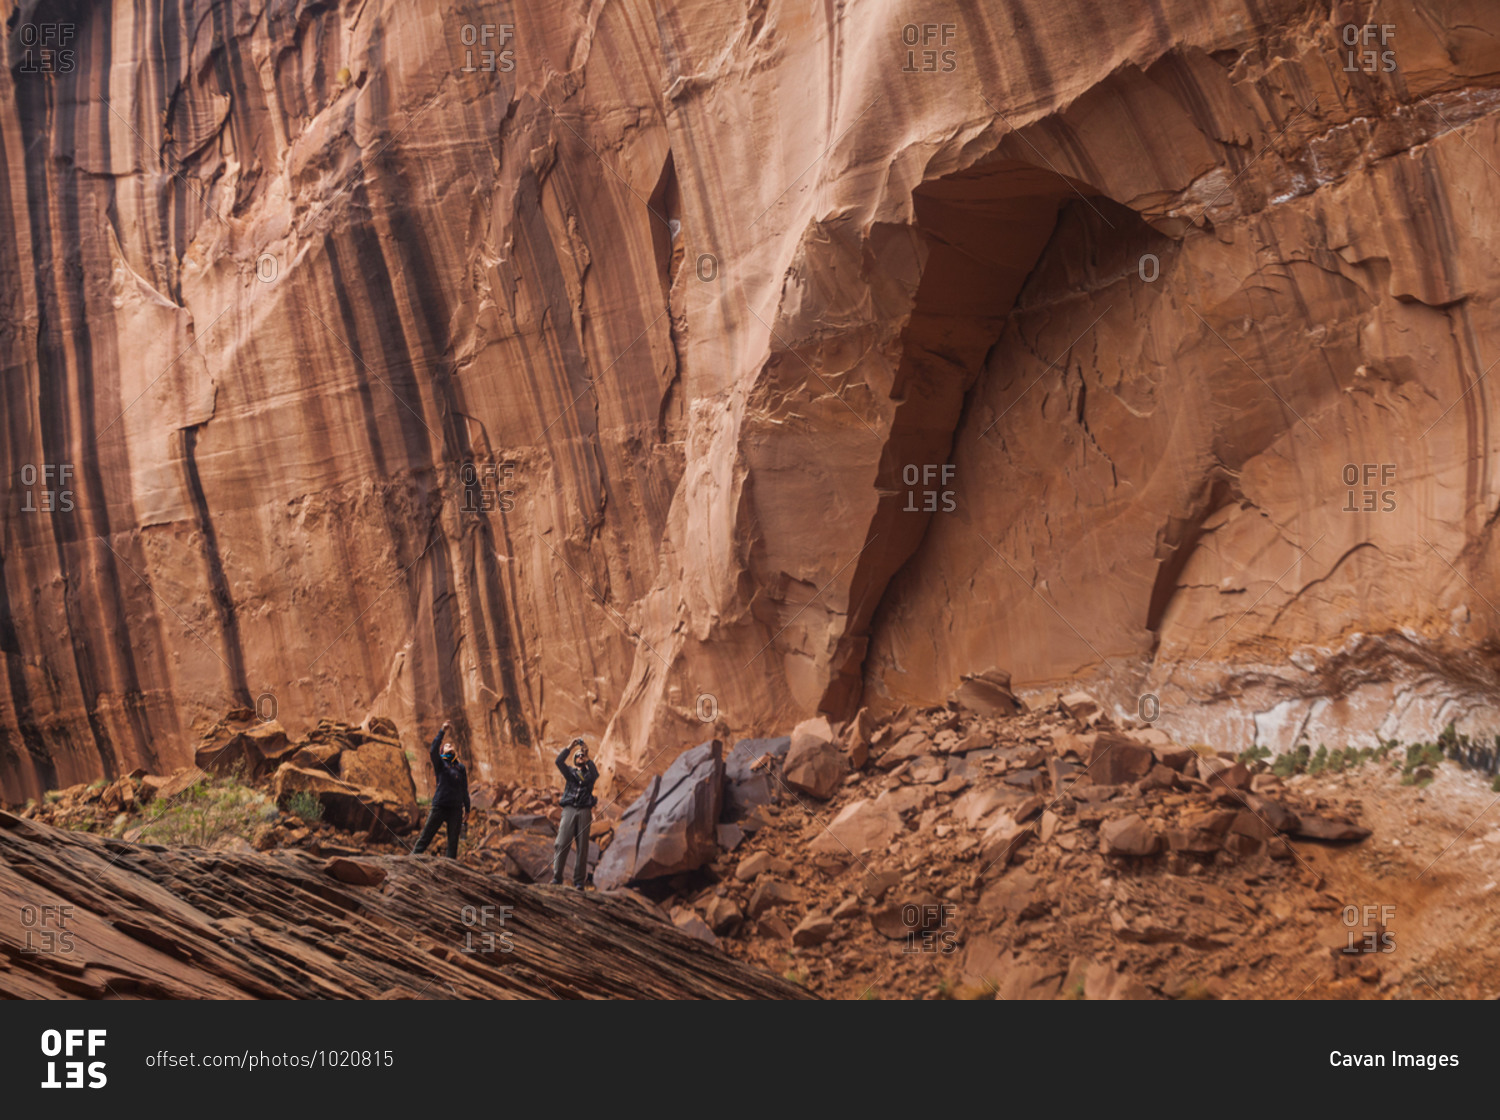 People below high sandstone canyon walls near escalante river, utah